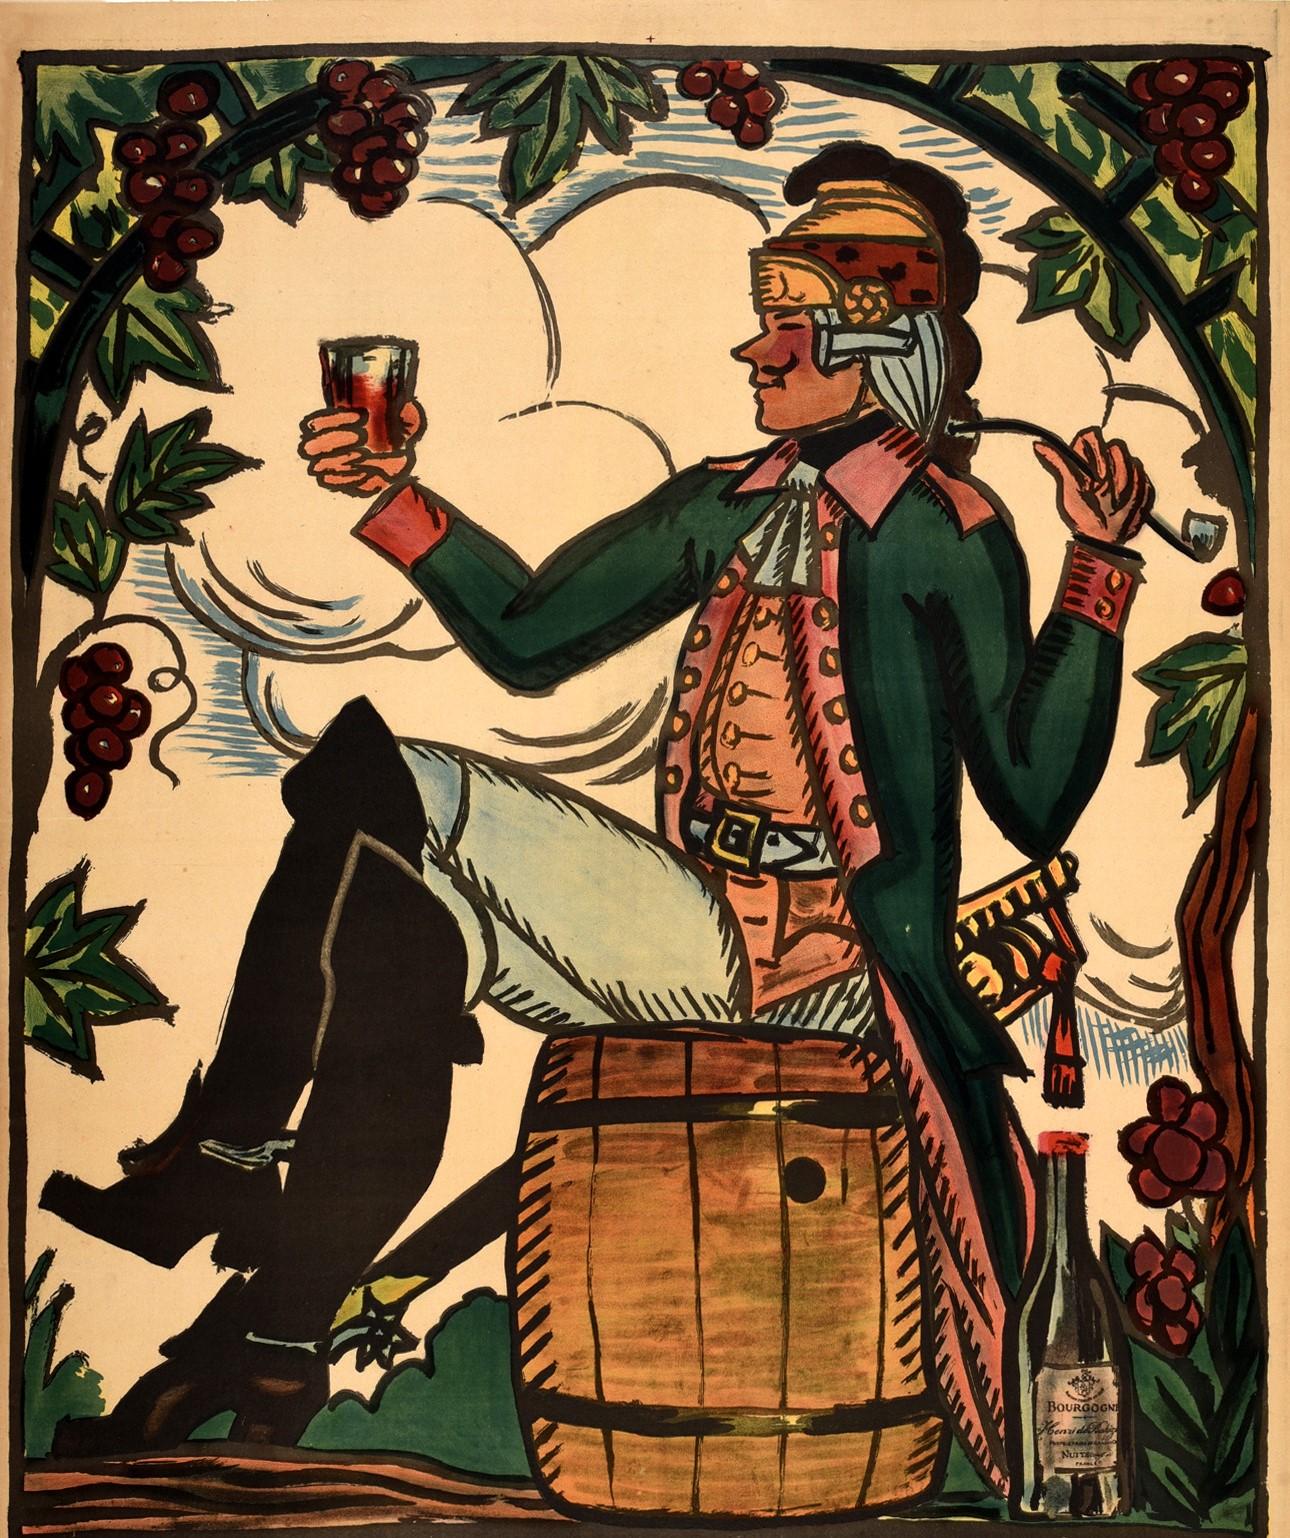 Original antique French wine advertising poster for Henri de Bahezre's Burgundy Wines / Les Vins de Bourgogne de Henri de Bahezre featuring great artwork by Guy Arnoux (1886-1951) depicting a smartly dressed man in military uniform with a sword on